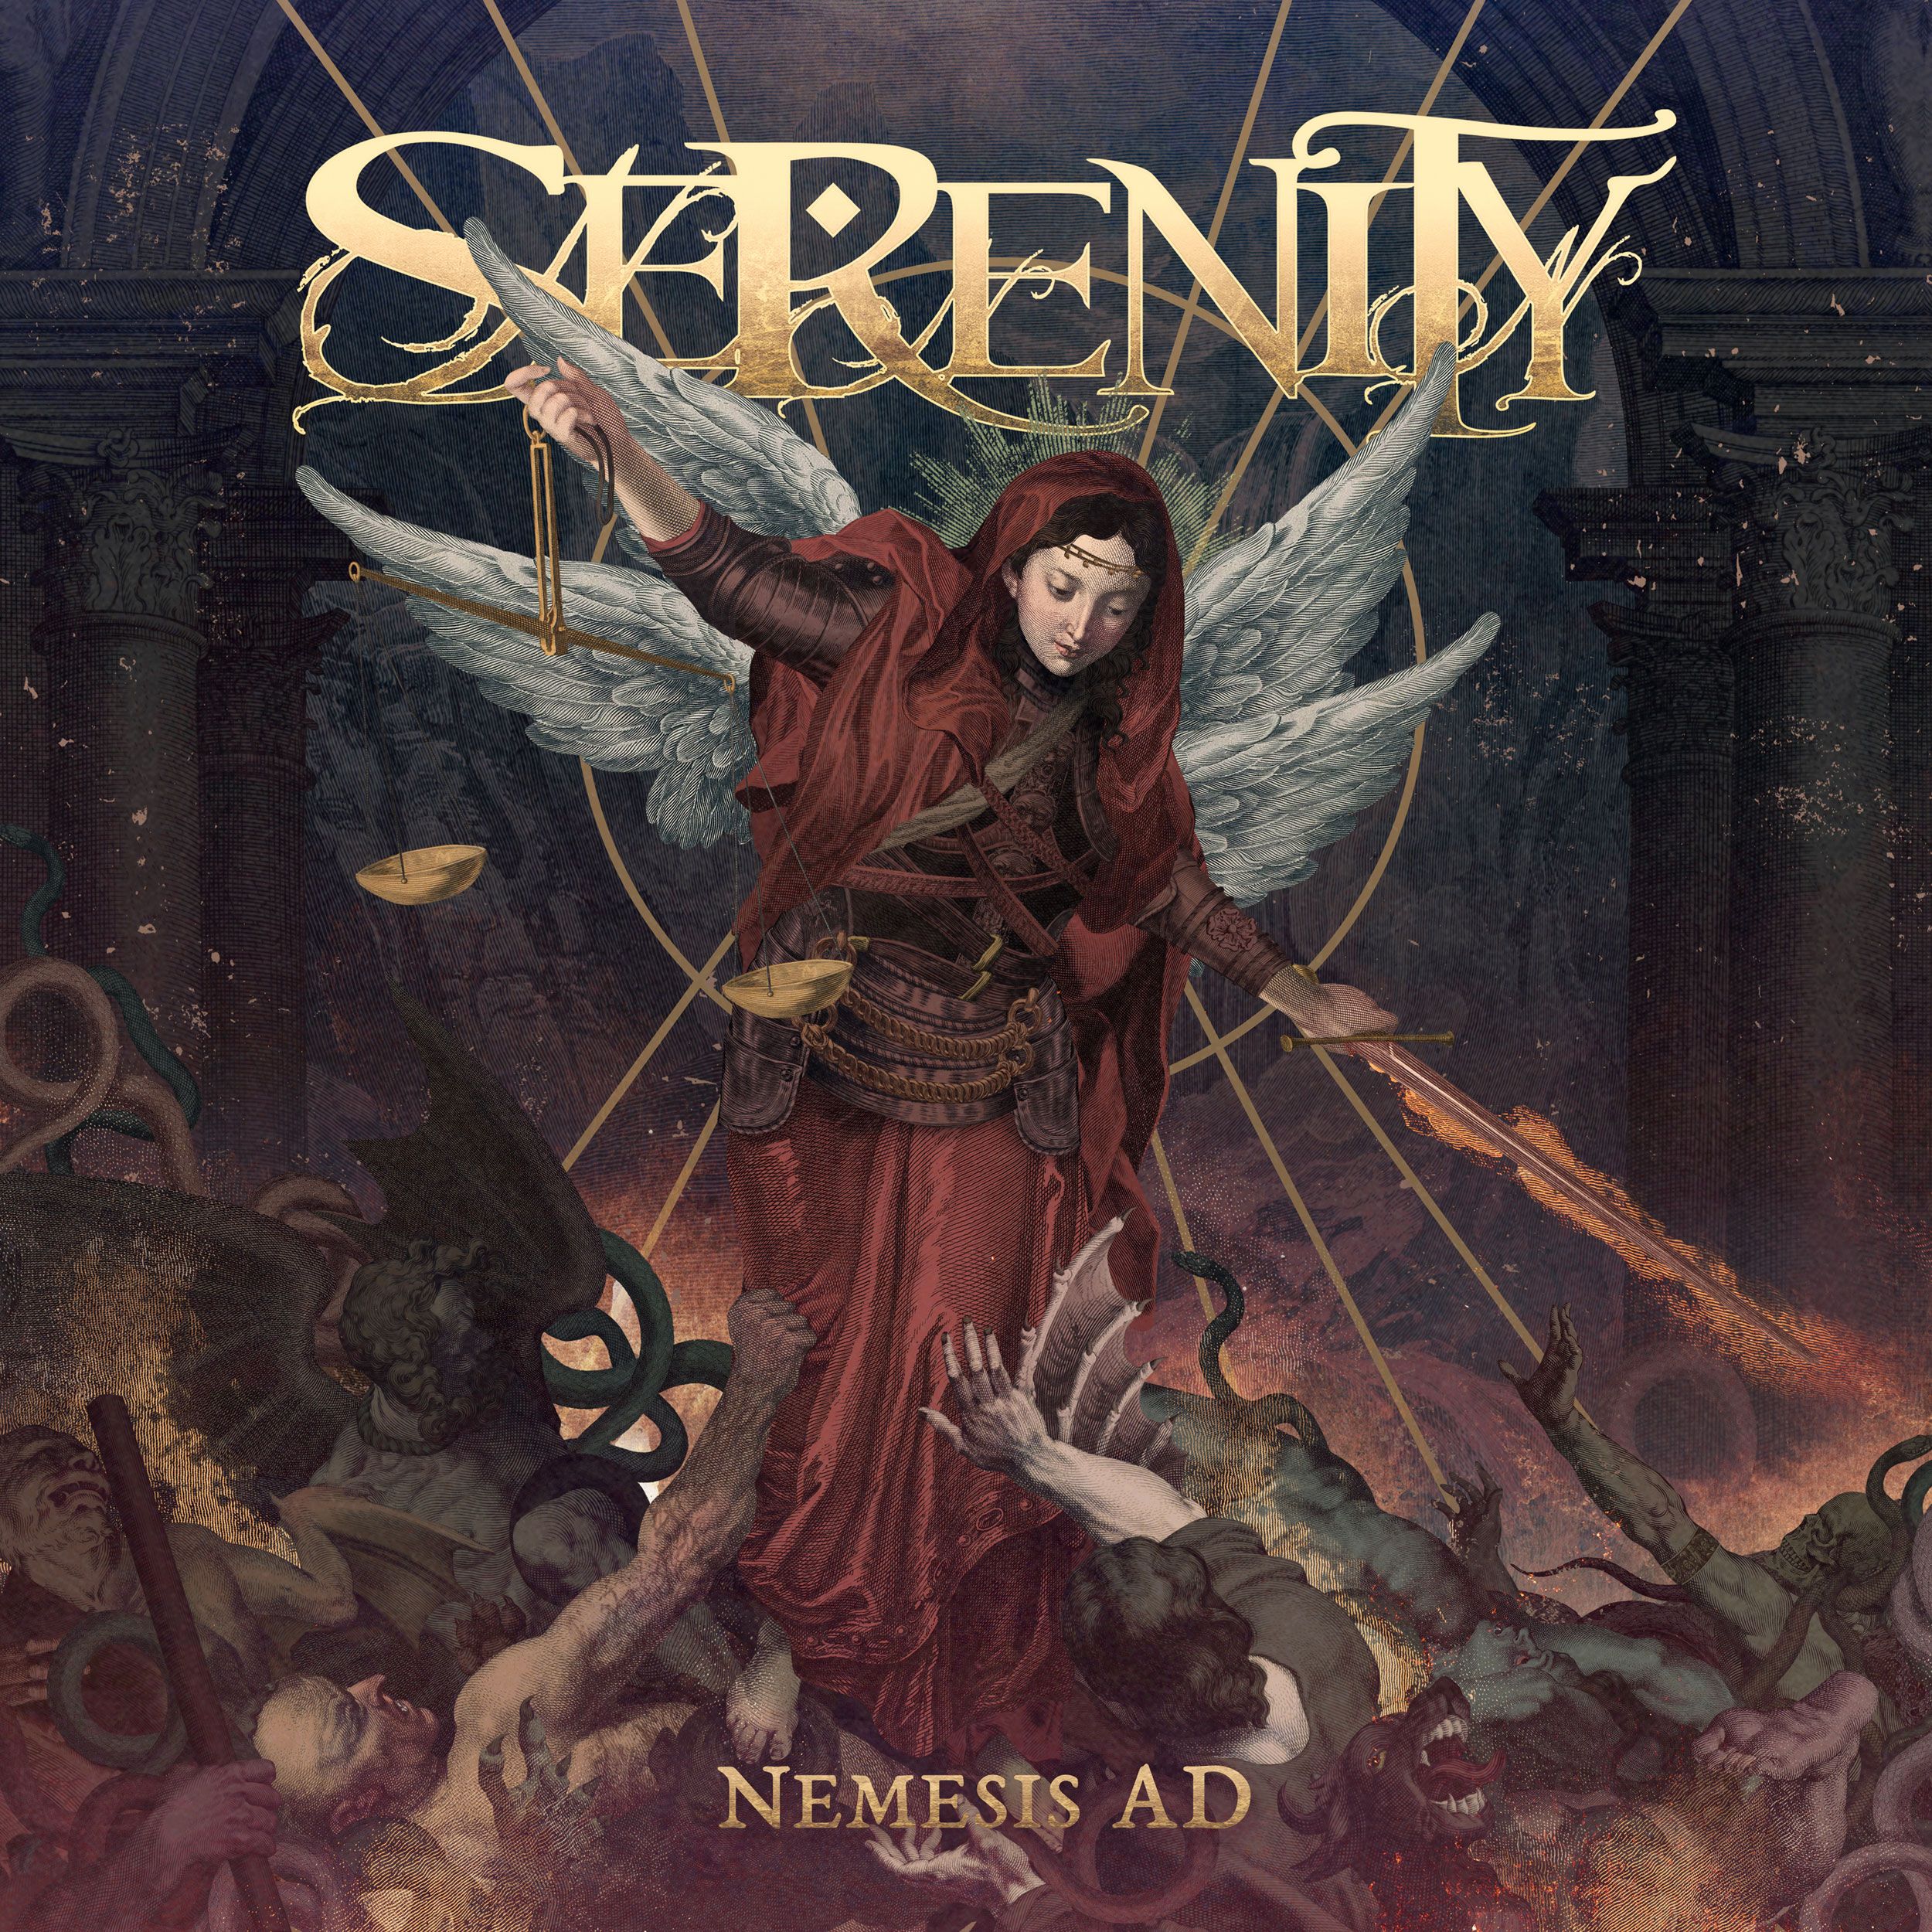 Albumcover "NEMESIS AD" Serenity